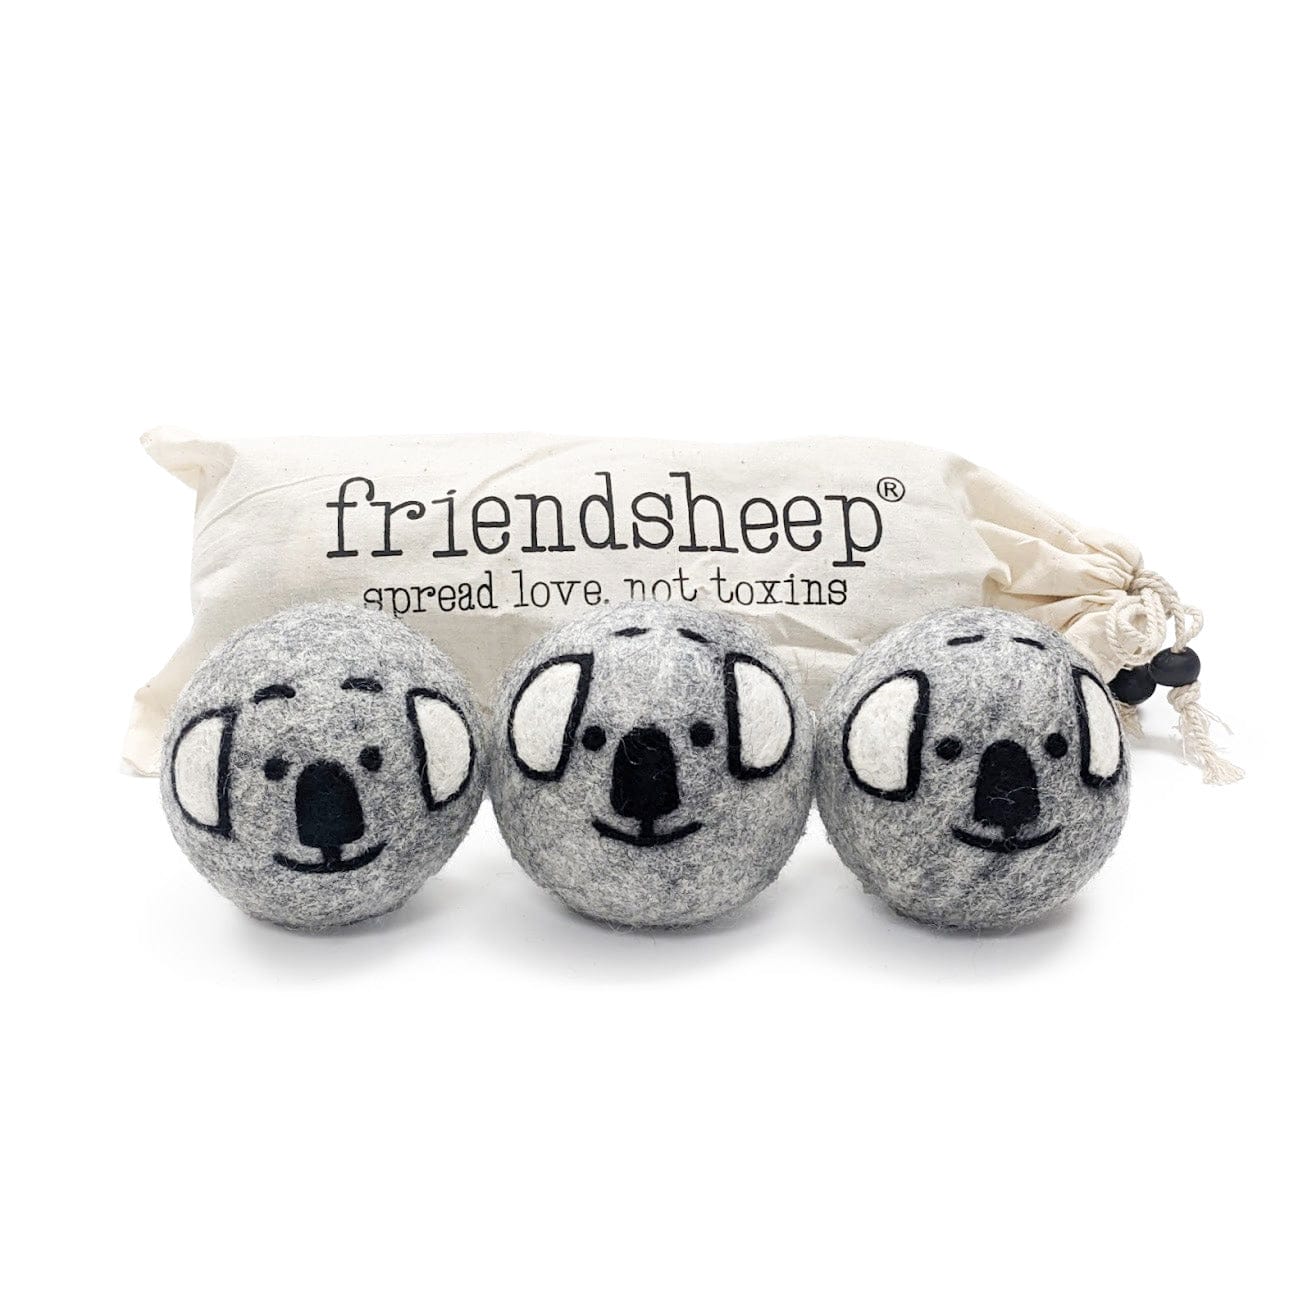 Friendsheep - Cuddly Koalas Eco Dryer Balls - Set of 3